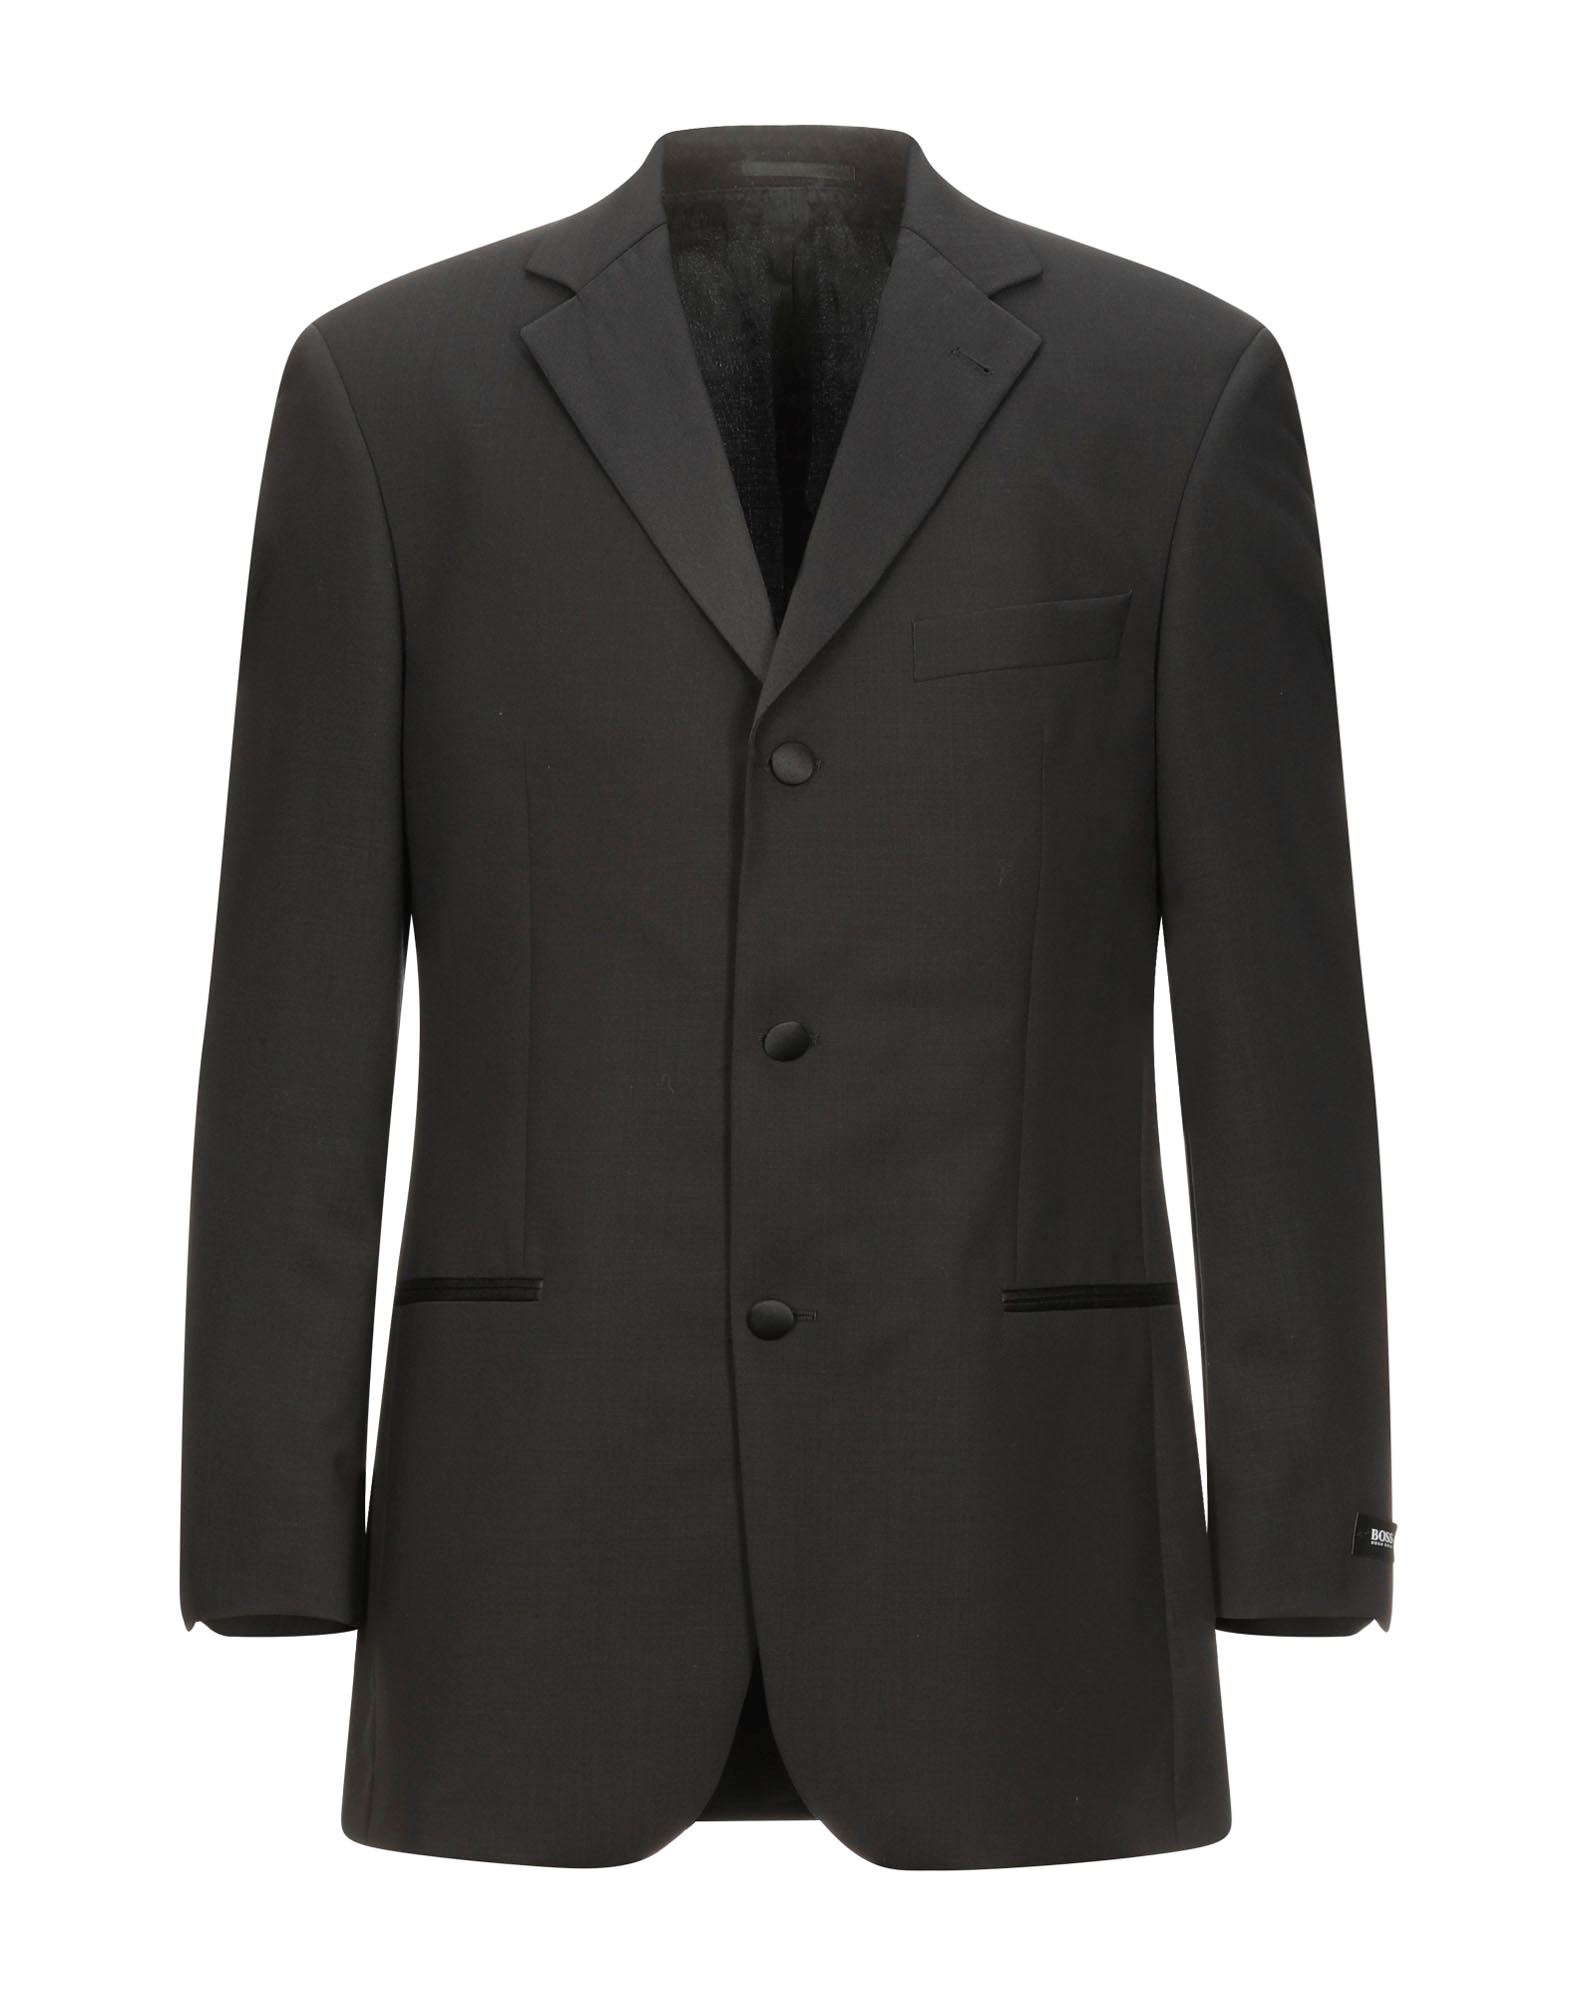 BOSS HUGO BOSS Suit jackets - Item 49621511